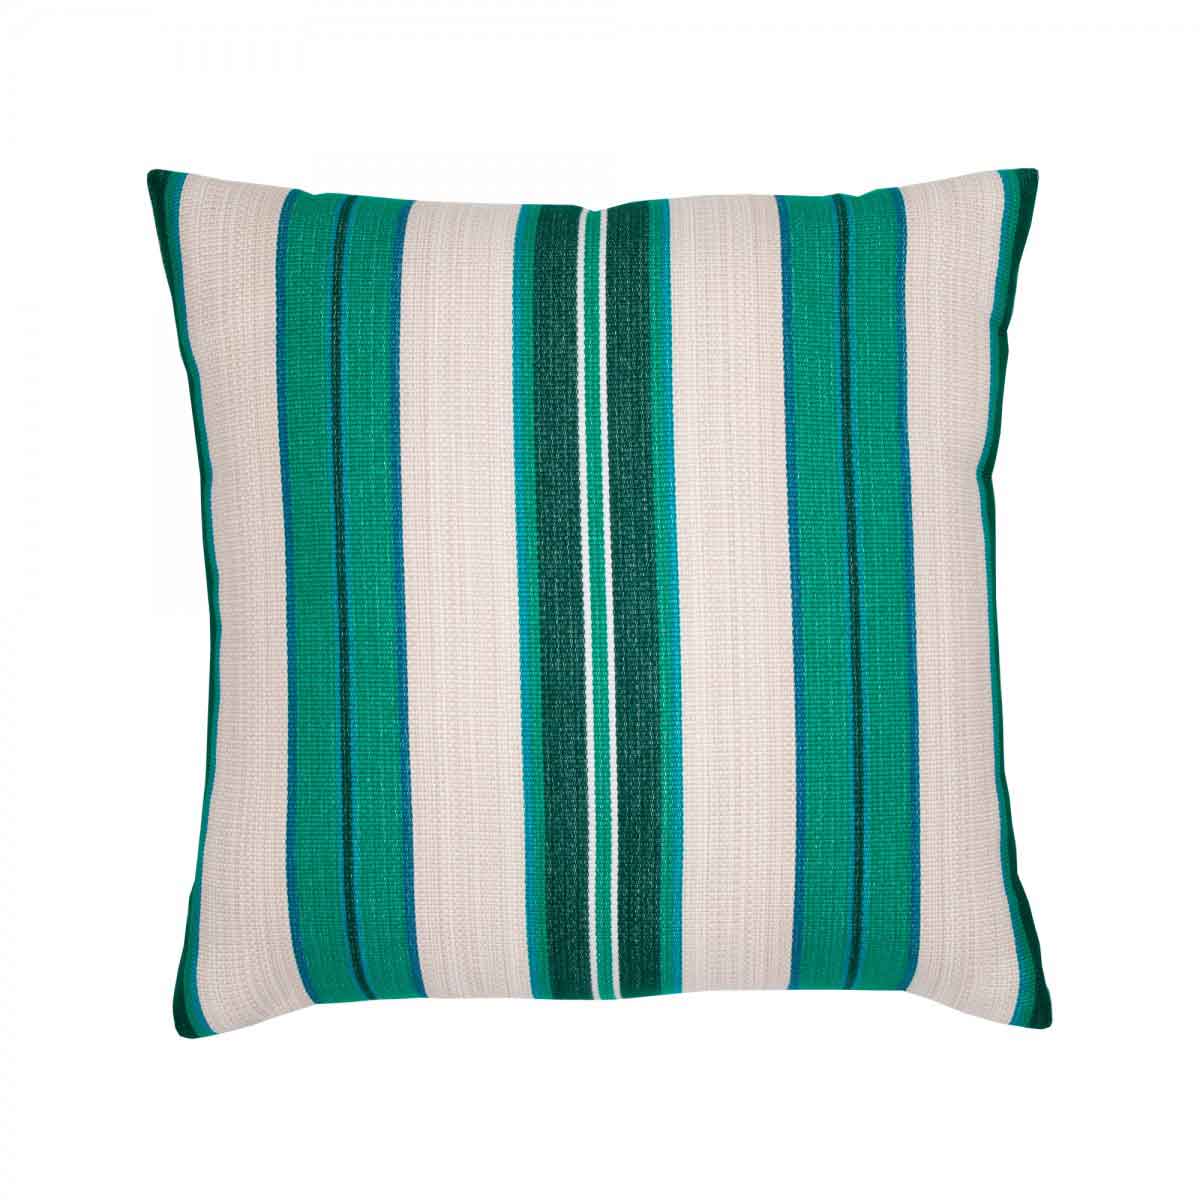 Fortitude Emerald Pillow